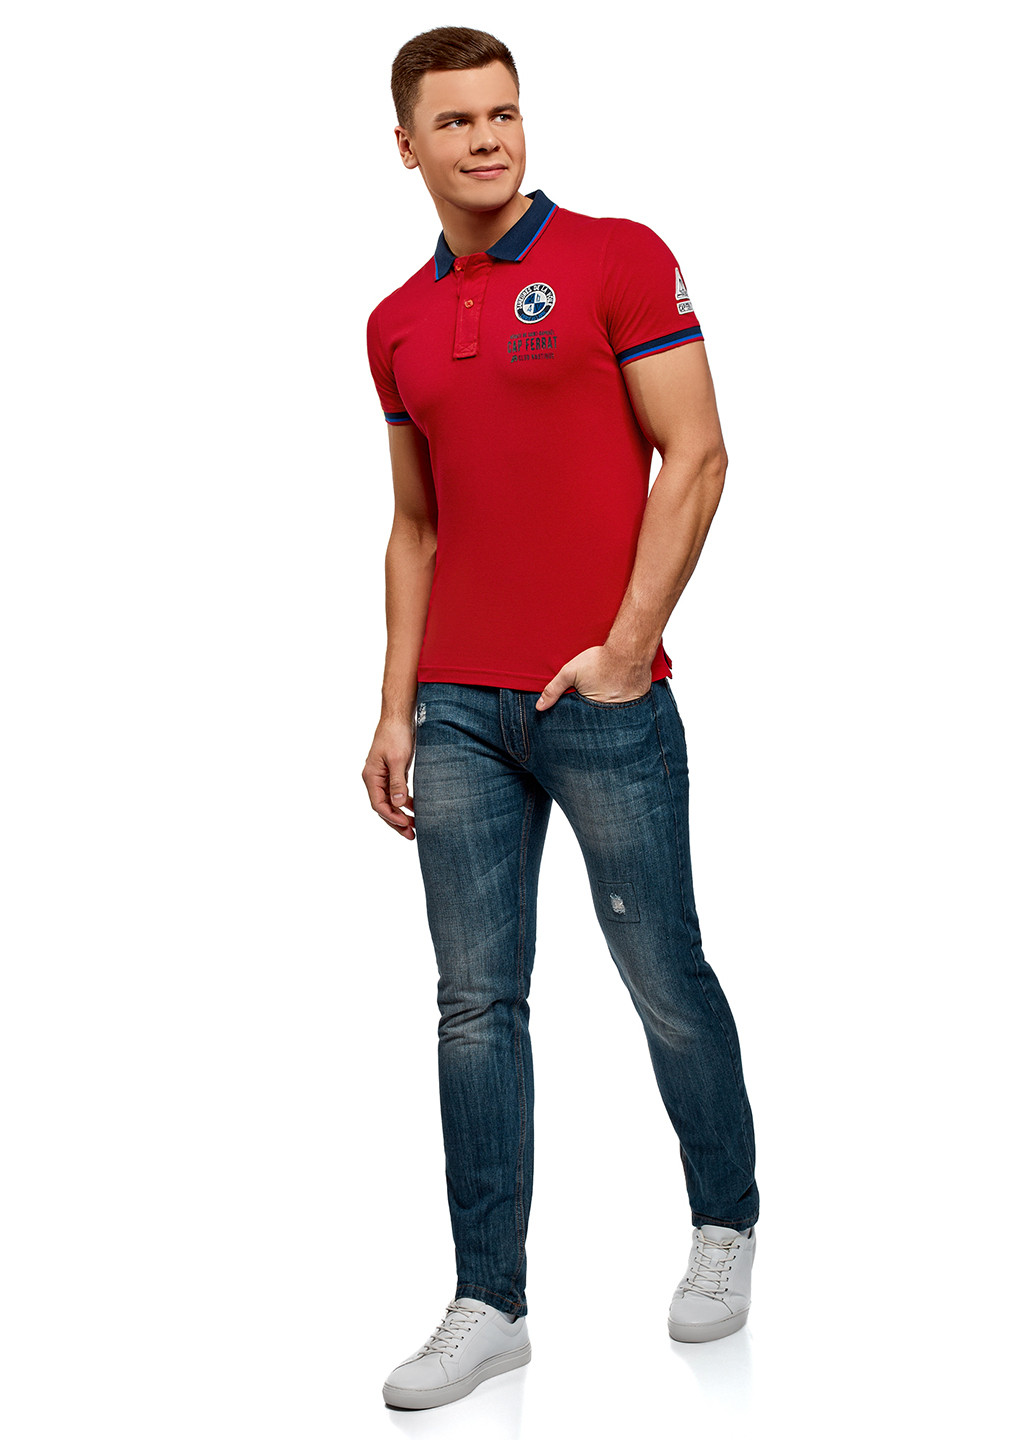 Красная футболка-поло для мужчин Oodji с надписью